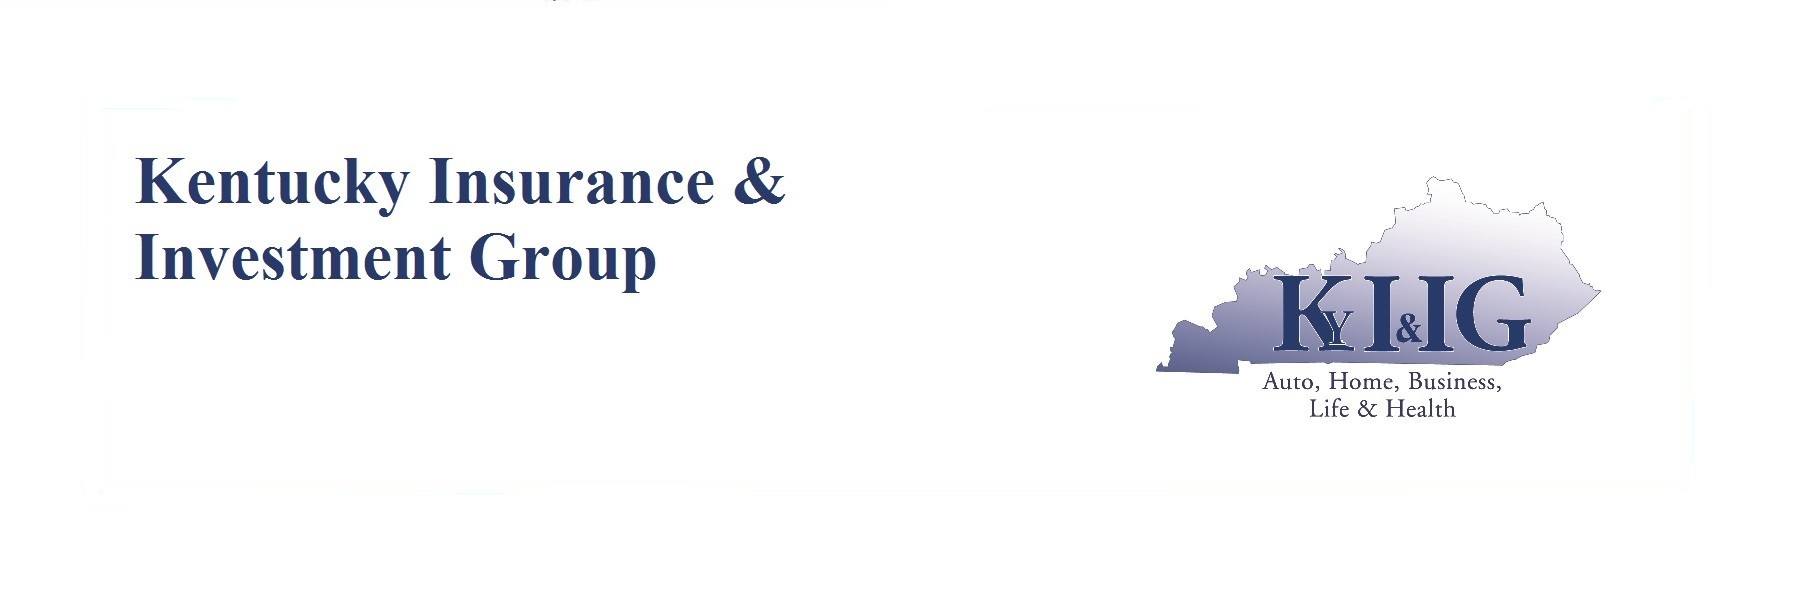 Kentucky Insurance & Investment Group LinkedIn